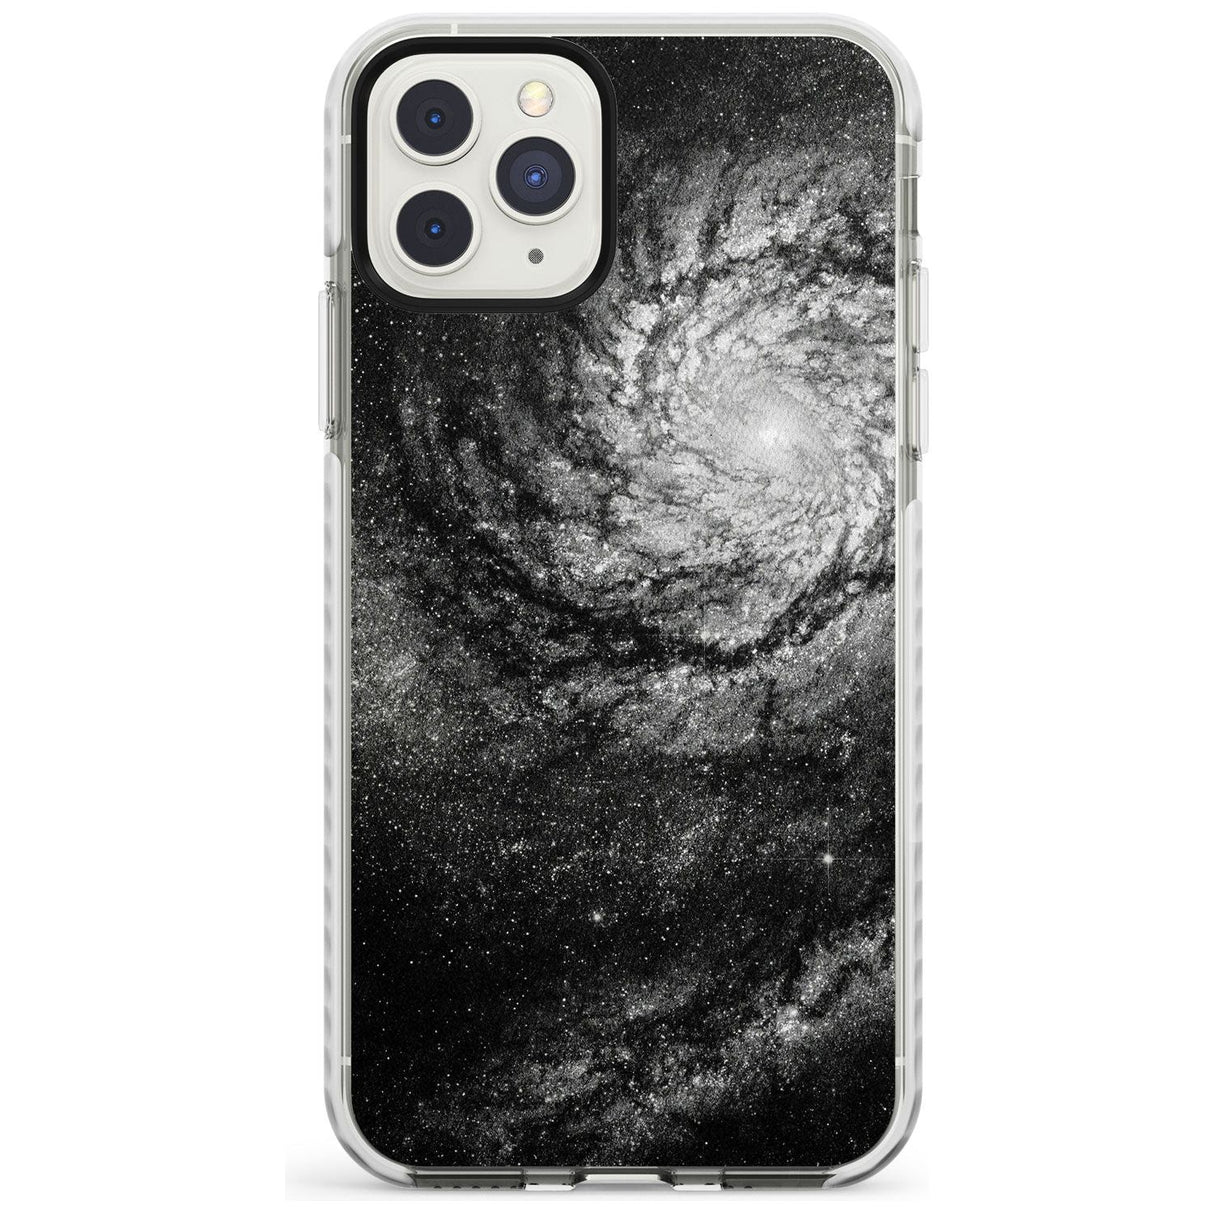 Night Sky Galaxies: Milky Way Galaxy Phone Case iPhone 11 Pro Max / Impact Case,iPhone 11 Pro / Impact Case,iPhone 12 Pro / Impact Case,iPhone 12 Pro Max / Impact Case Blanc Space